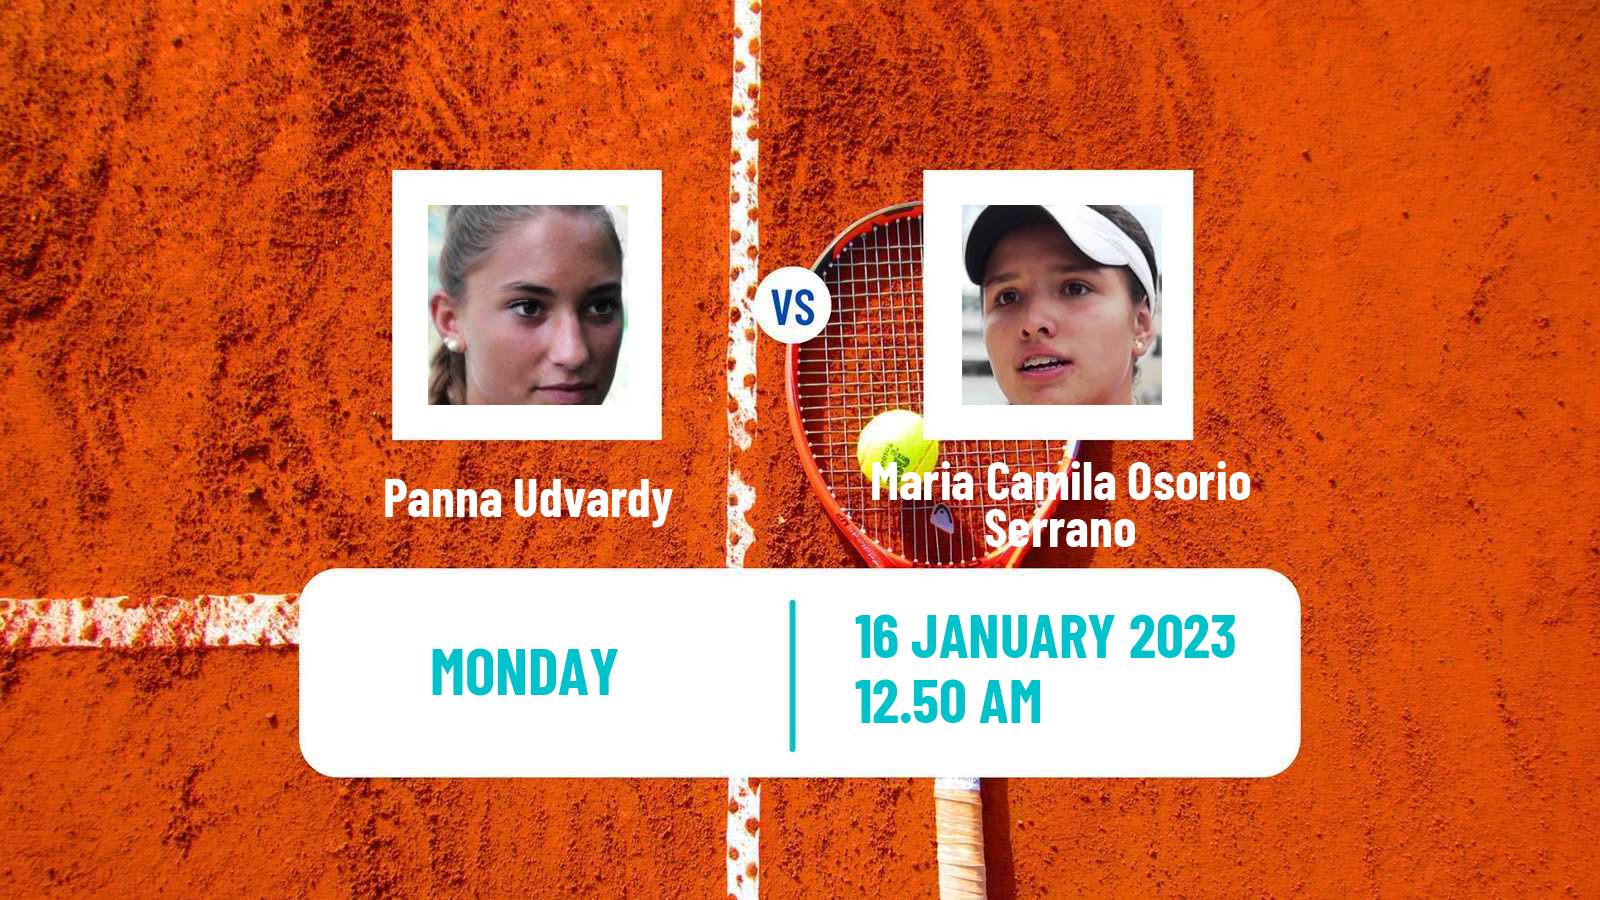 Tennis WTA Australian Open Panna Udvardy - Maria Camila Osorio Serrano